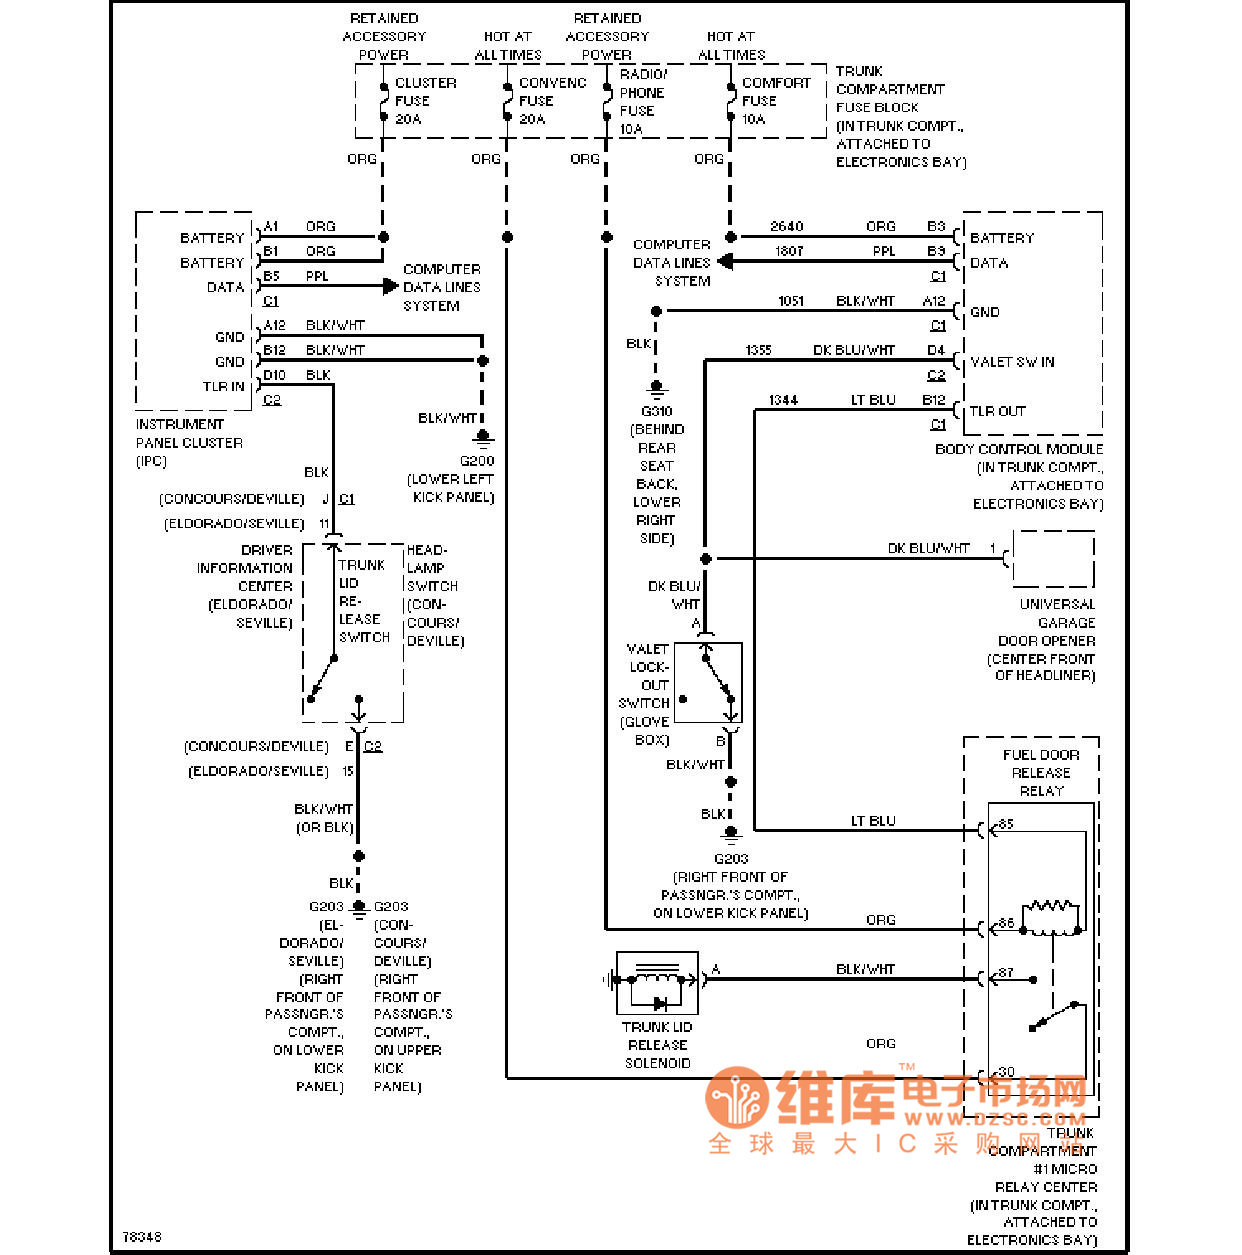 Kaidi Lak luggage compartment opening circuit diagram